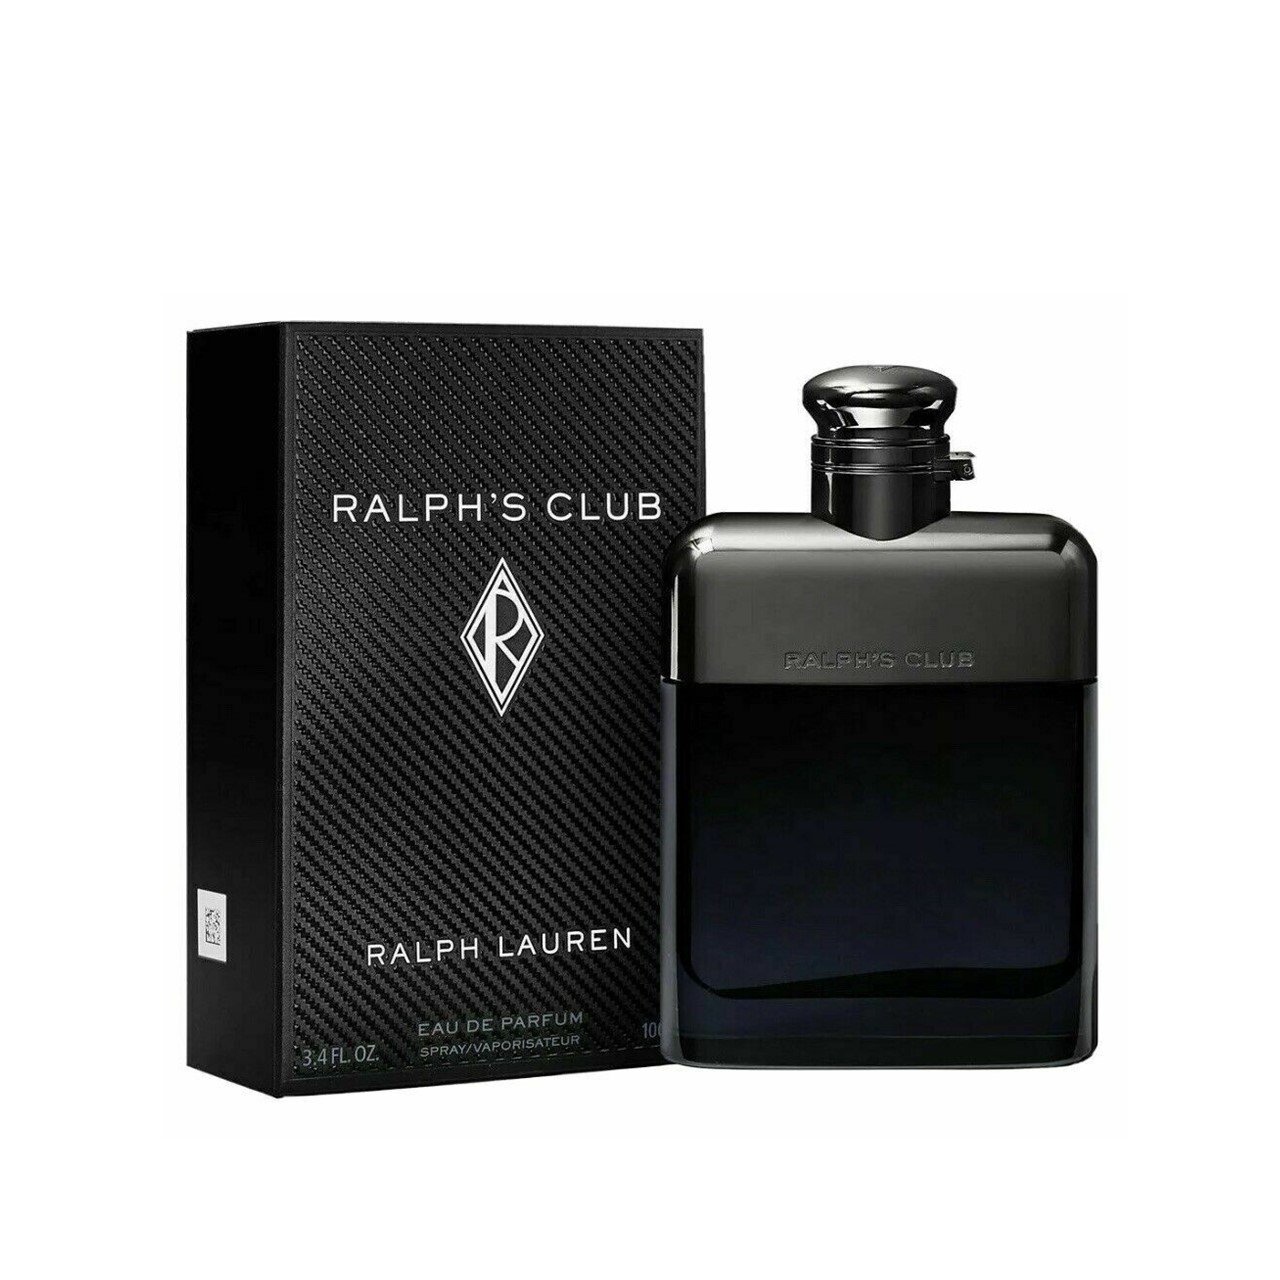 Ralph Lauren Ralph's Club Eau de Parfum For Men 100ml (3.4fl oz)